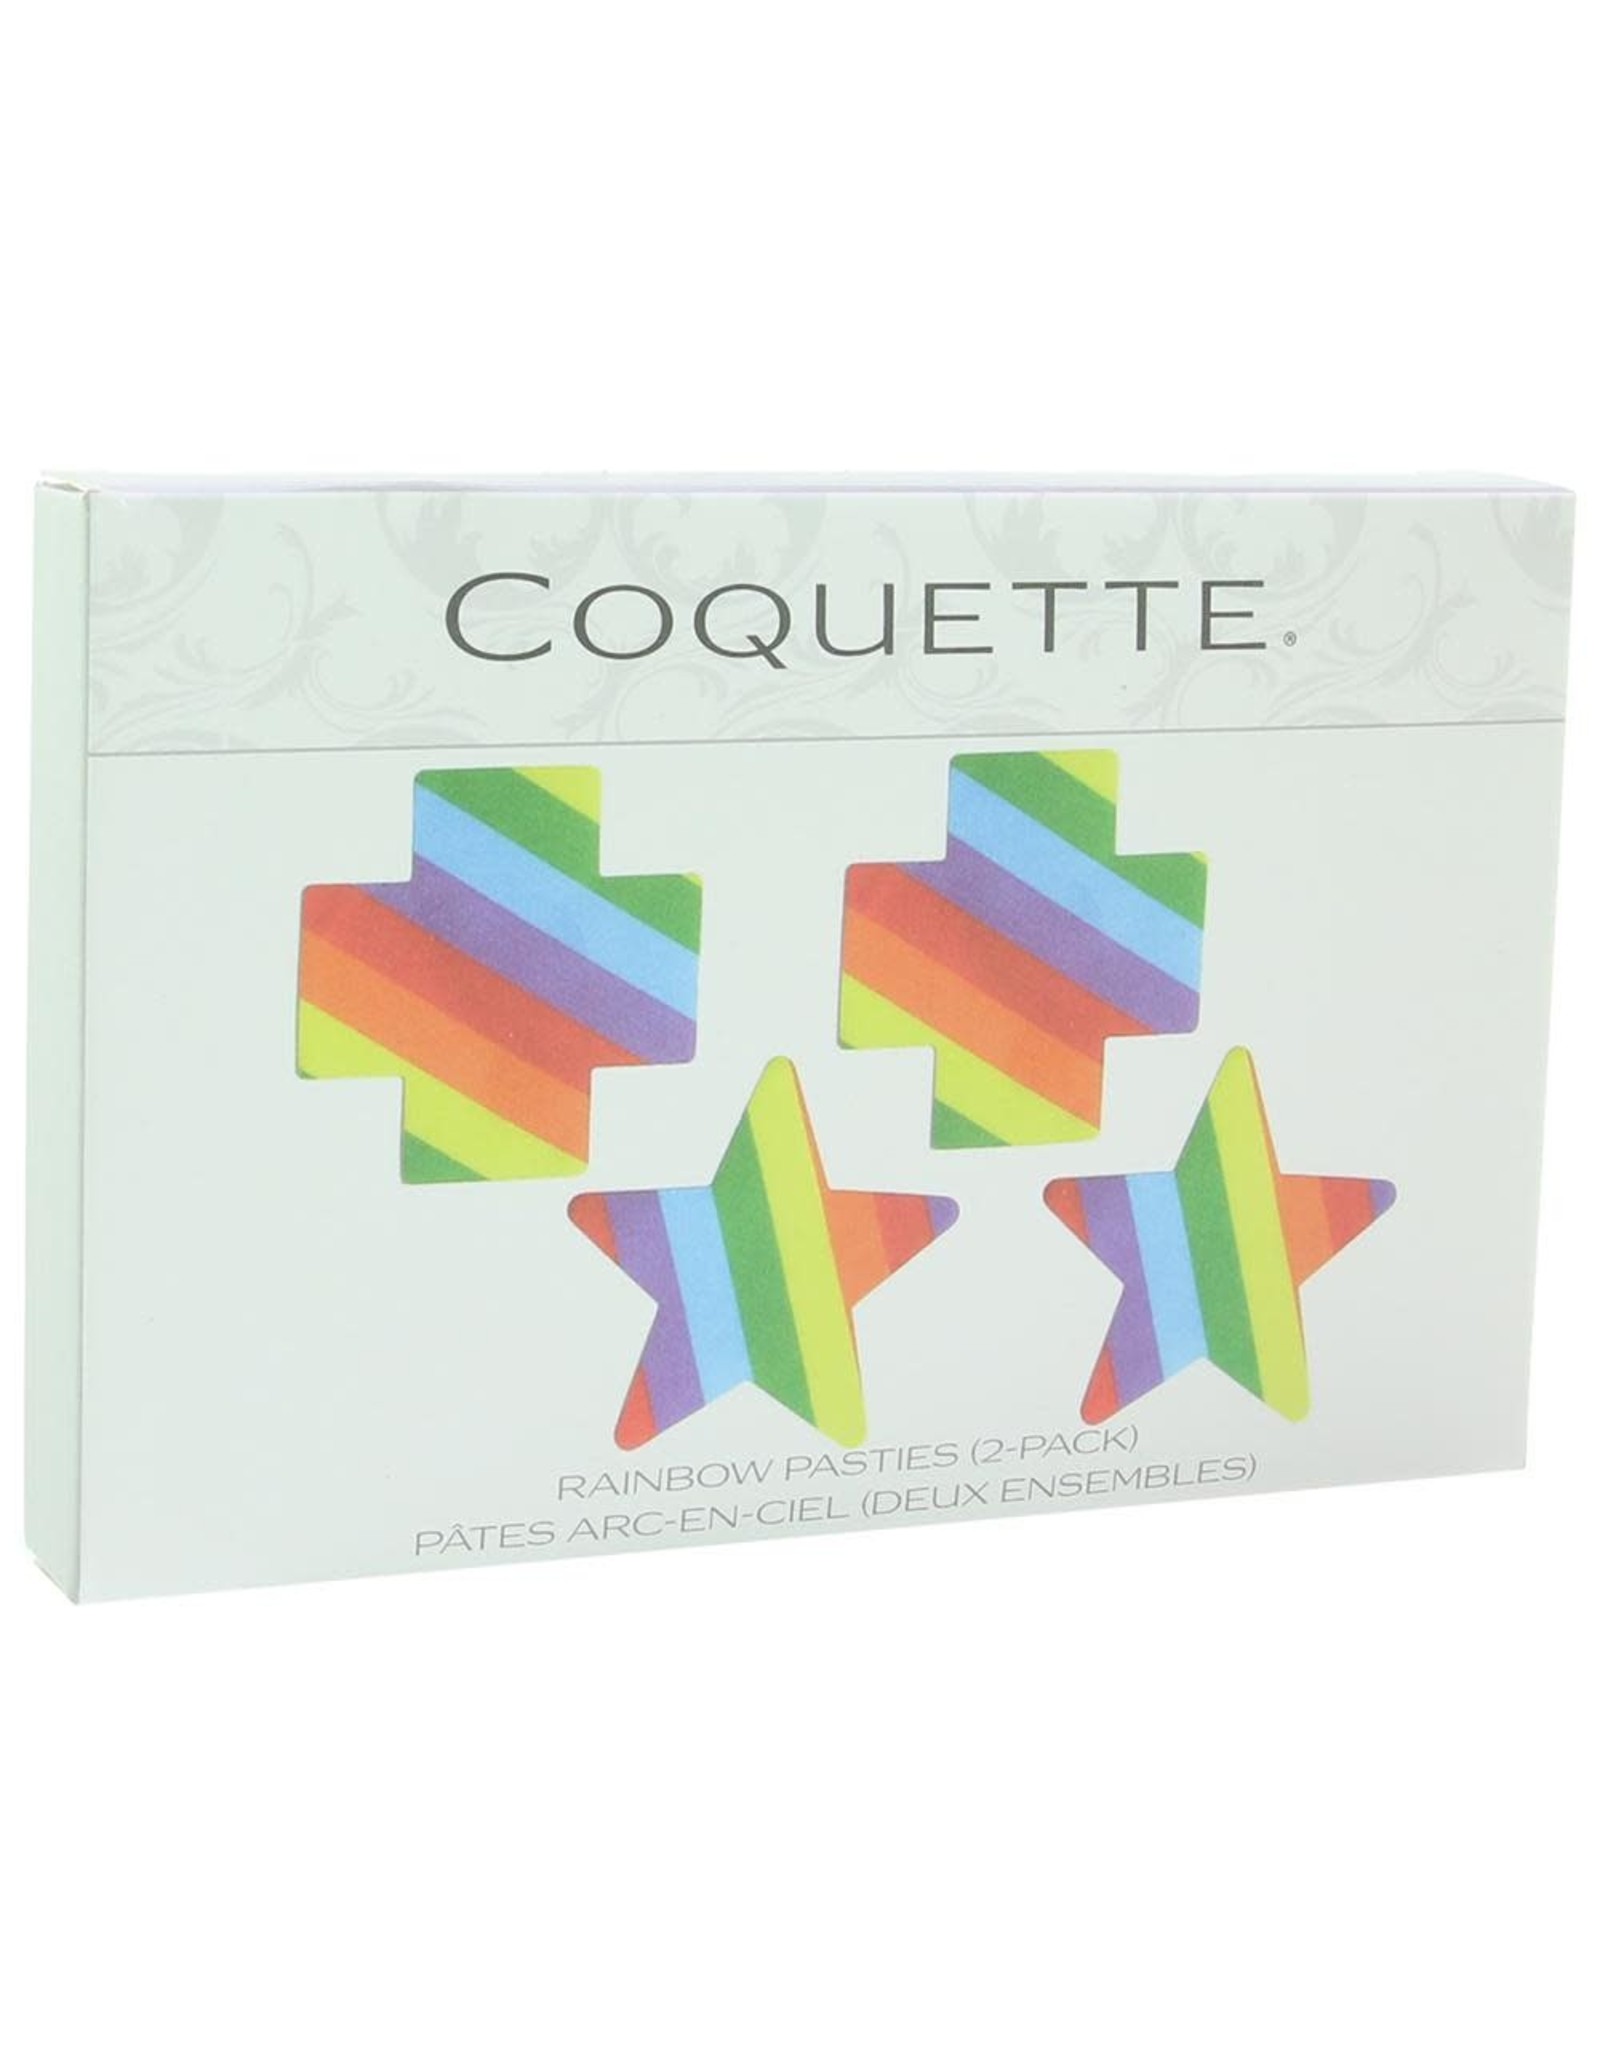 Coquette Rainbow Pasties (2 pack)